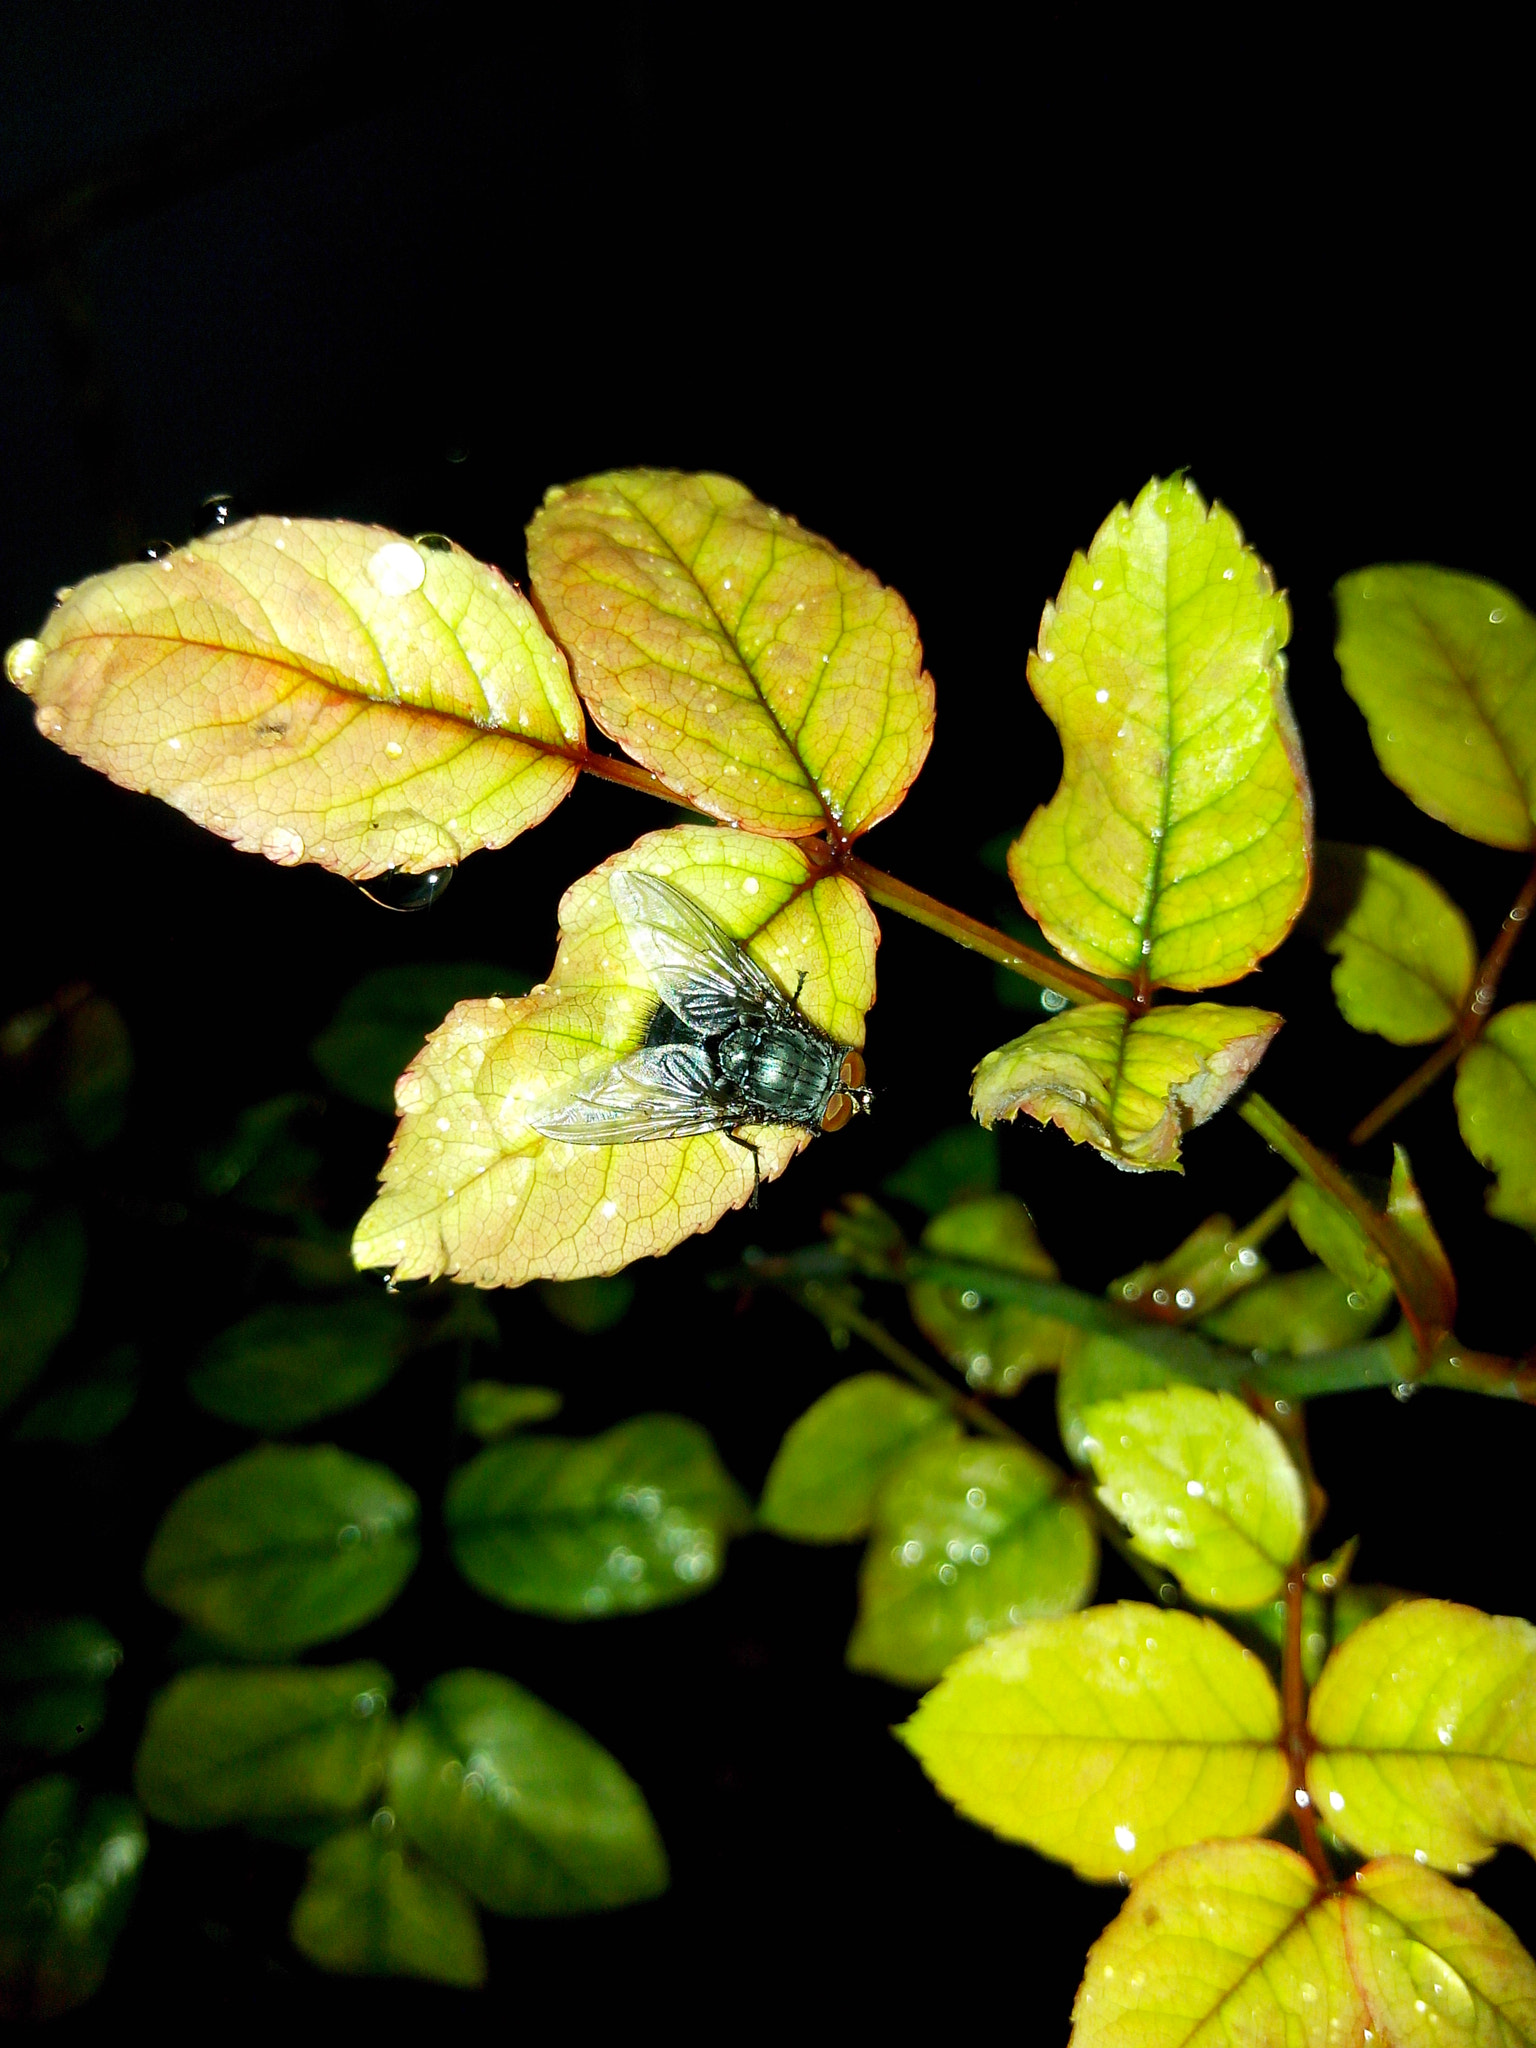 Motorola RAZR D3 sample photo. A fly at night photography